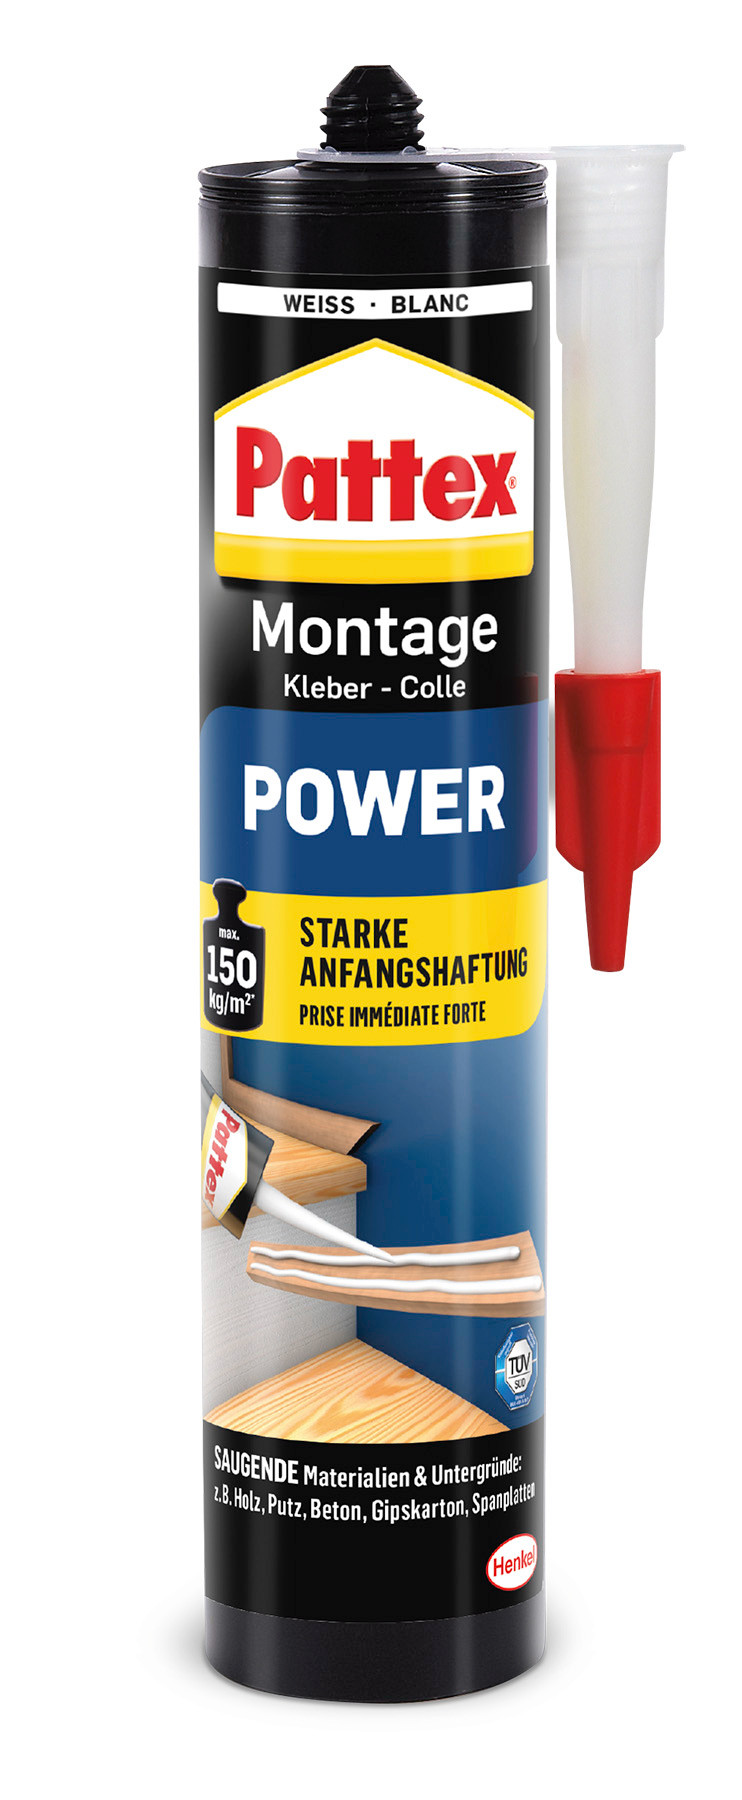 Pattex Montage Power, 370 g